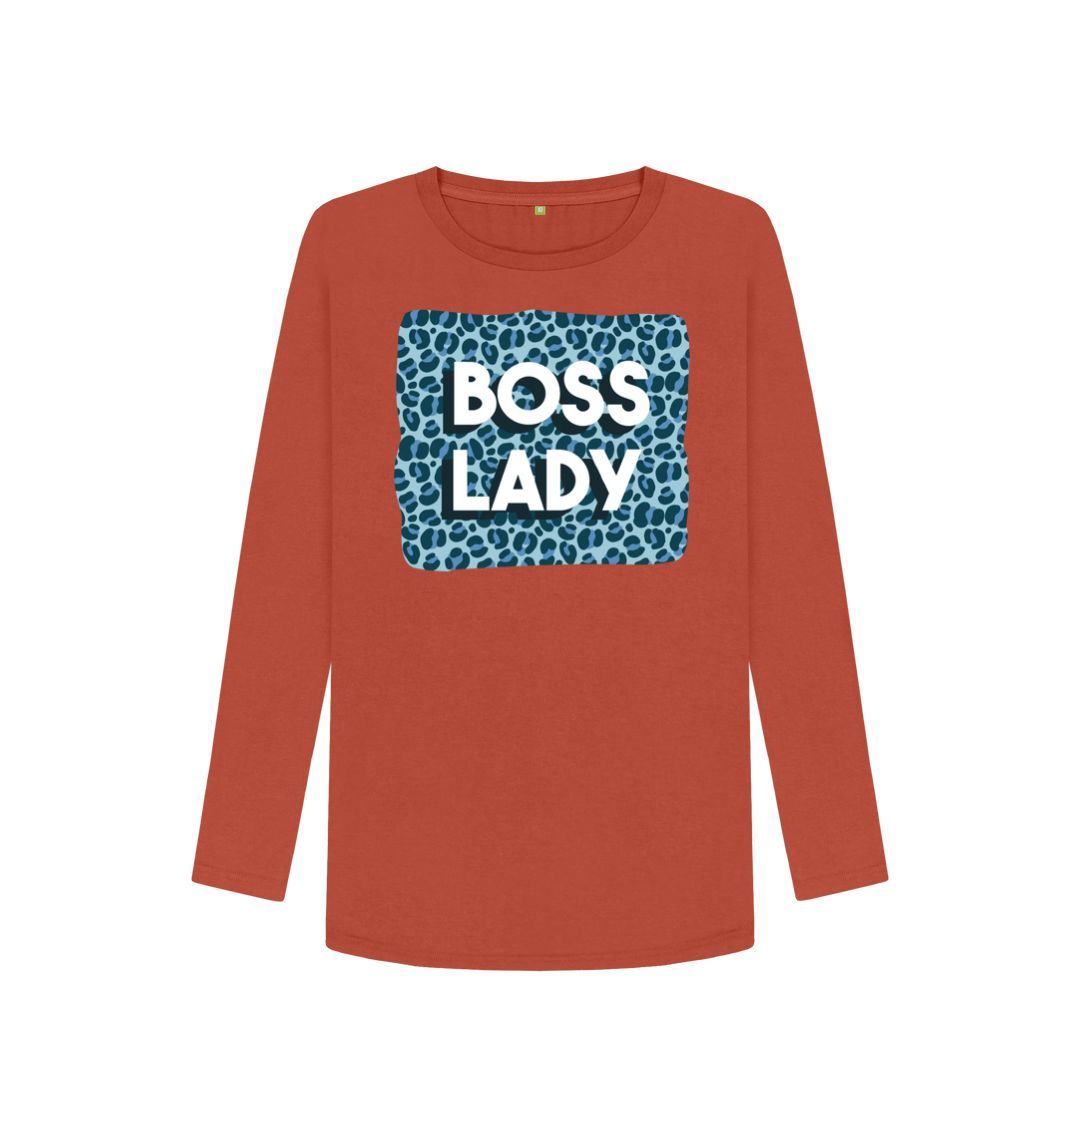 Rust Boss Lady Women's Long Sleeve T-Shirt